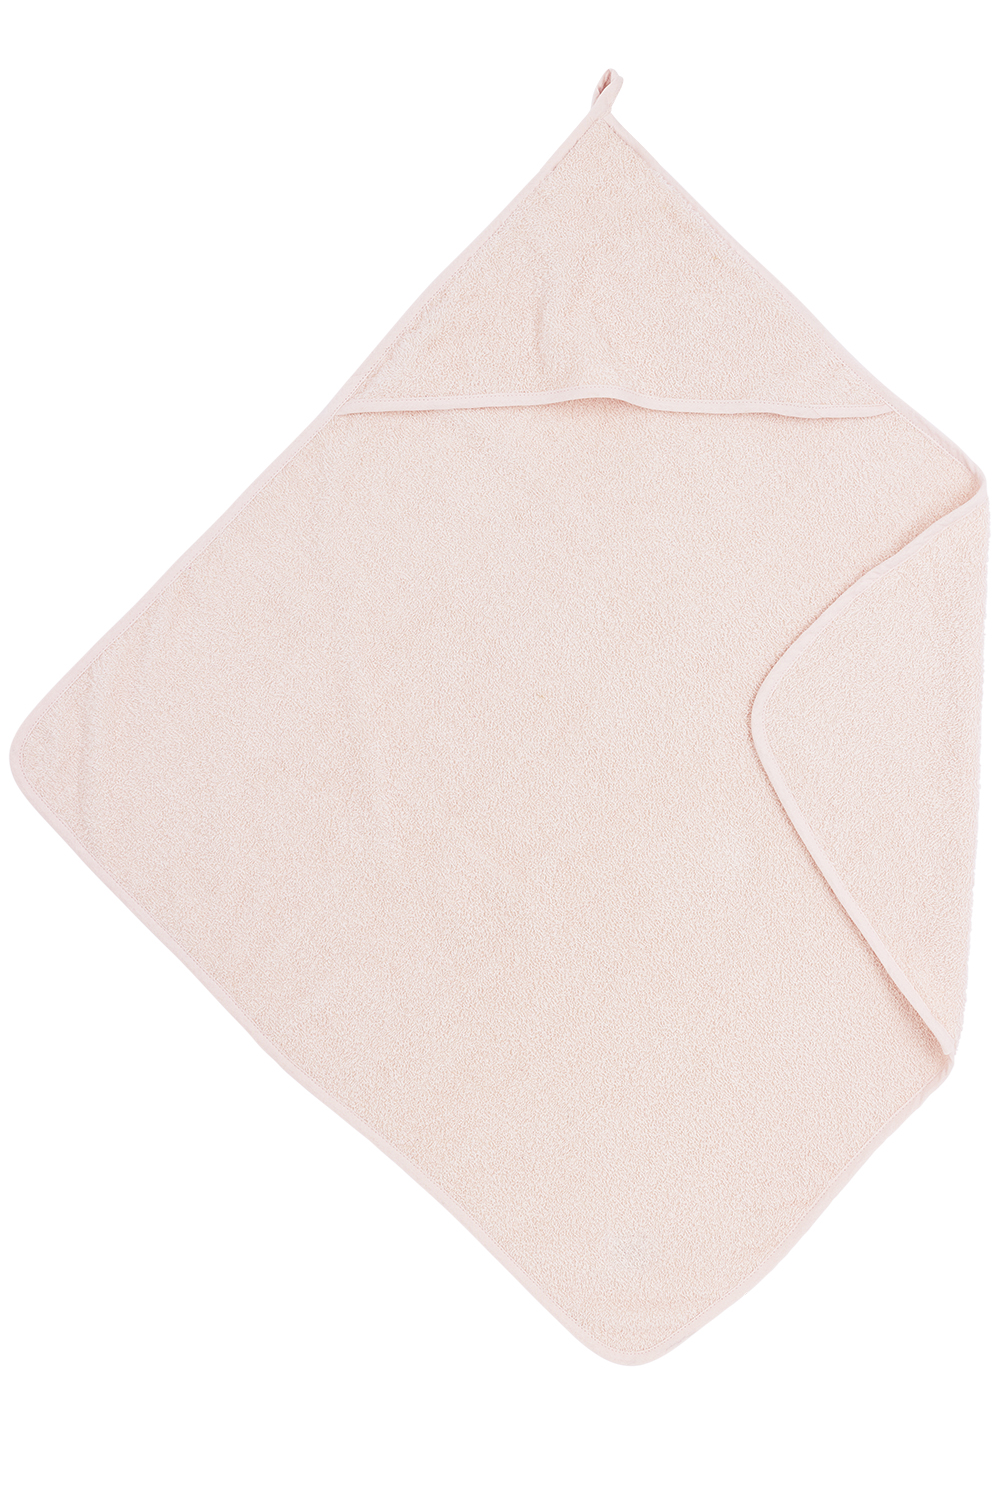 Kapuzentuch frottee Uni - soft pink - 75x75cm